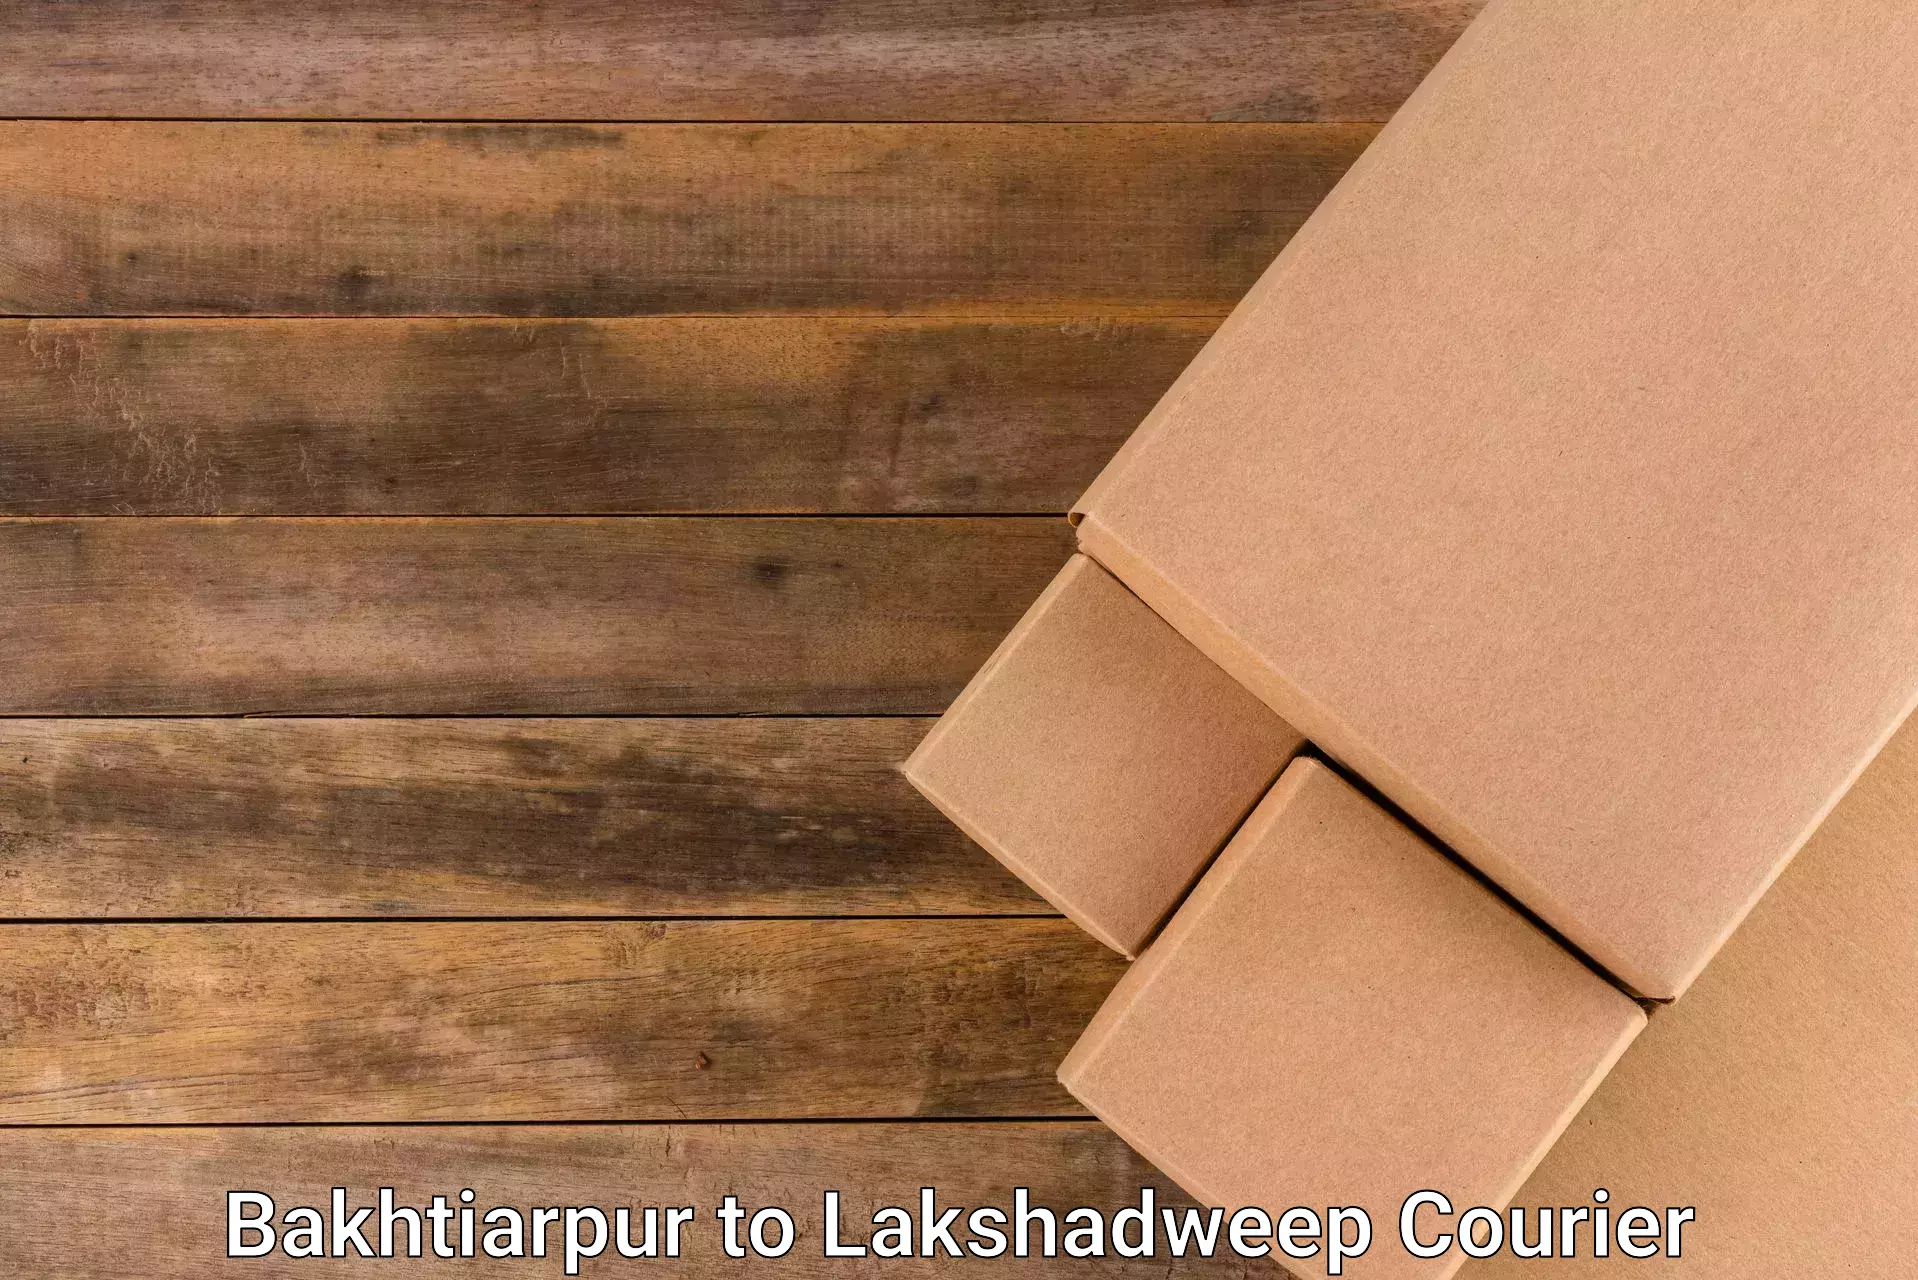 High-priority parcel service in Bakhtiarpur to Lakshadweep